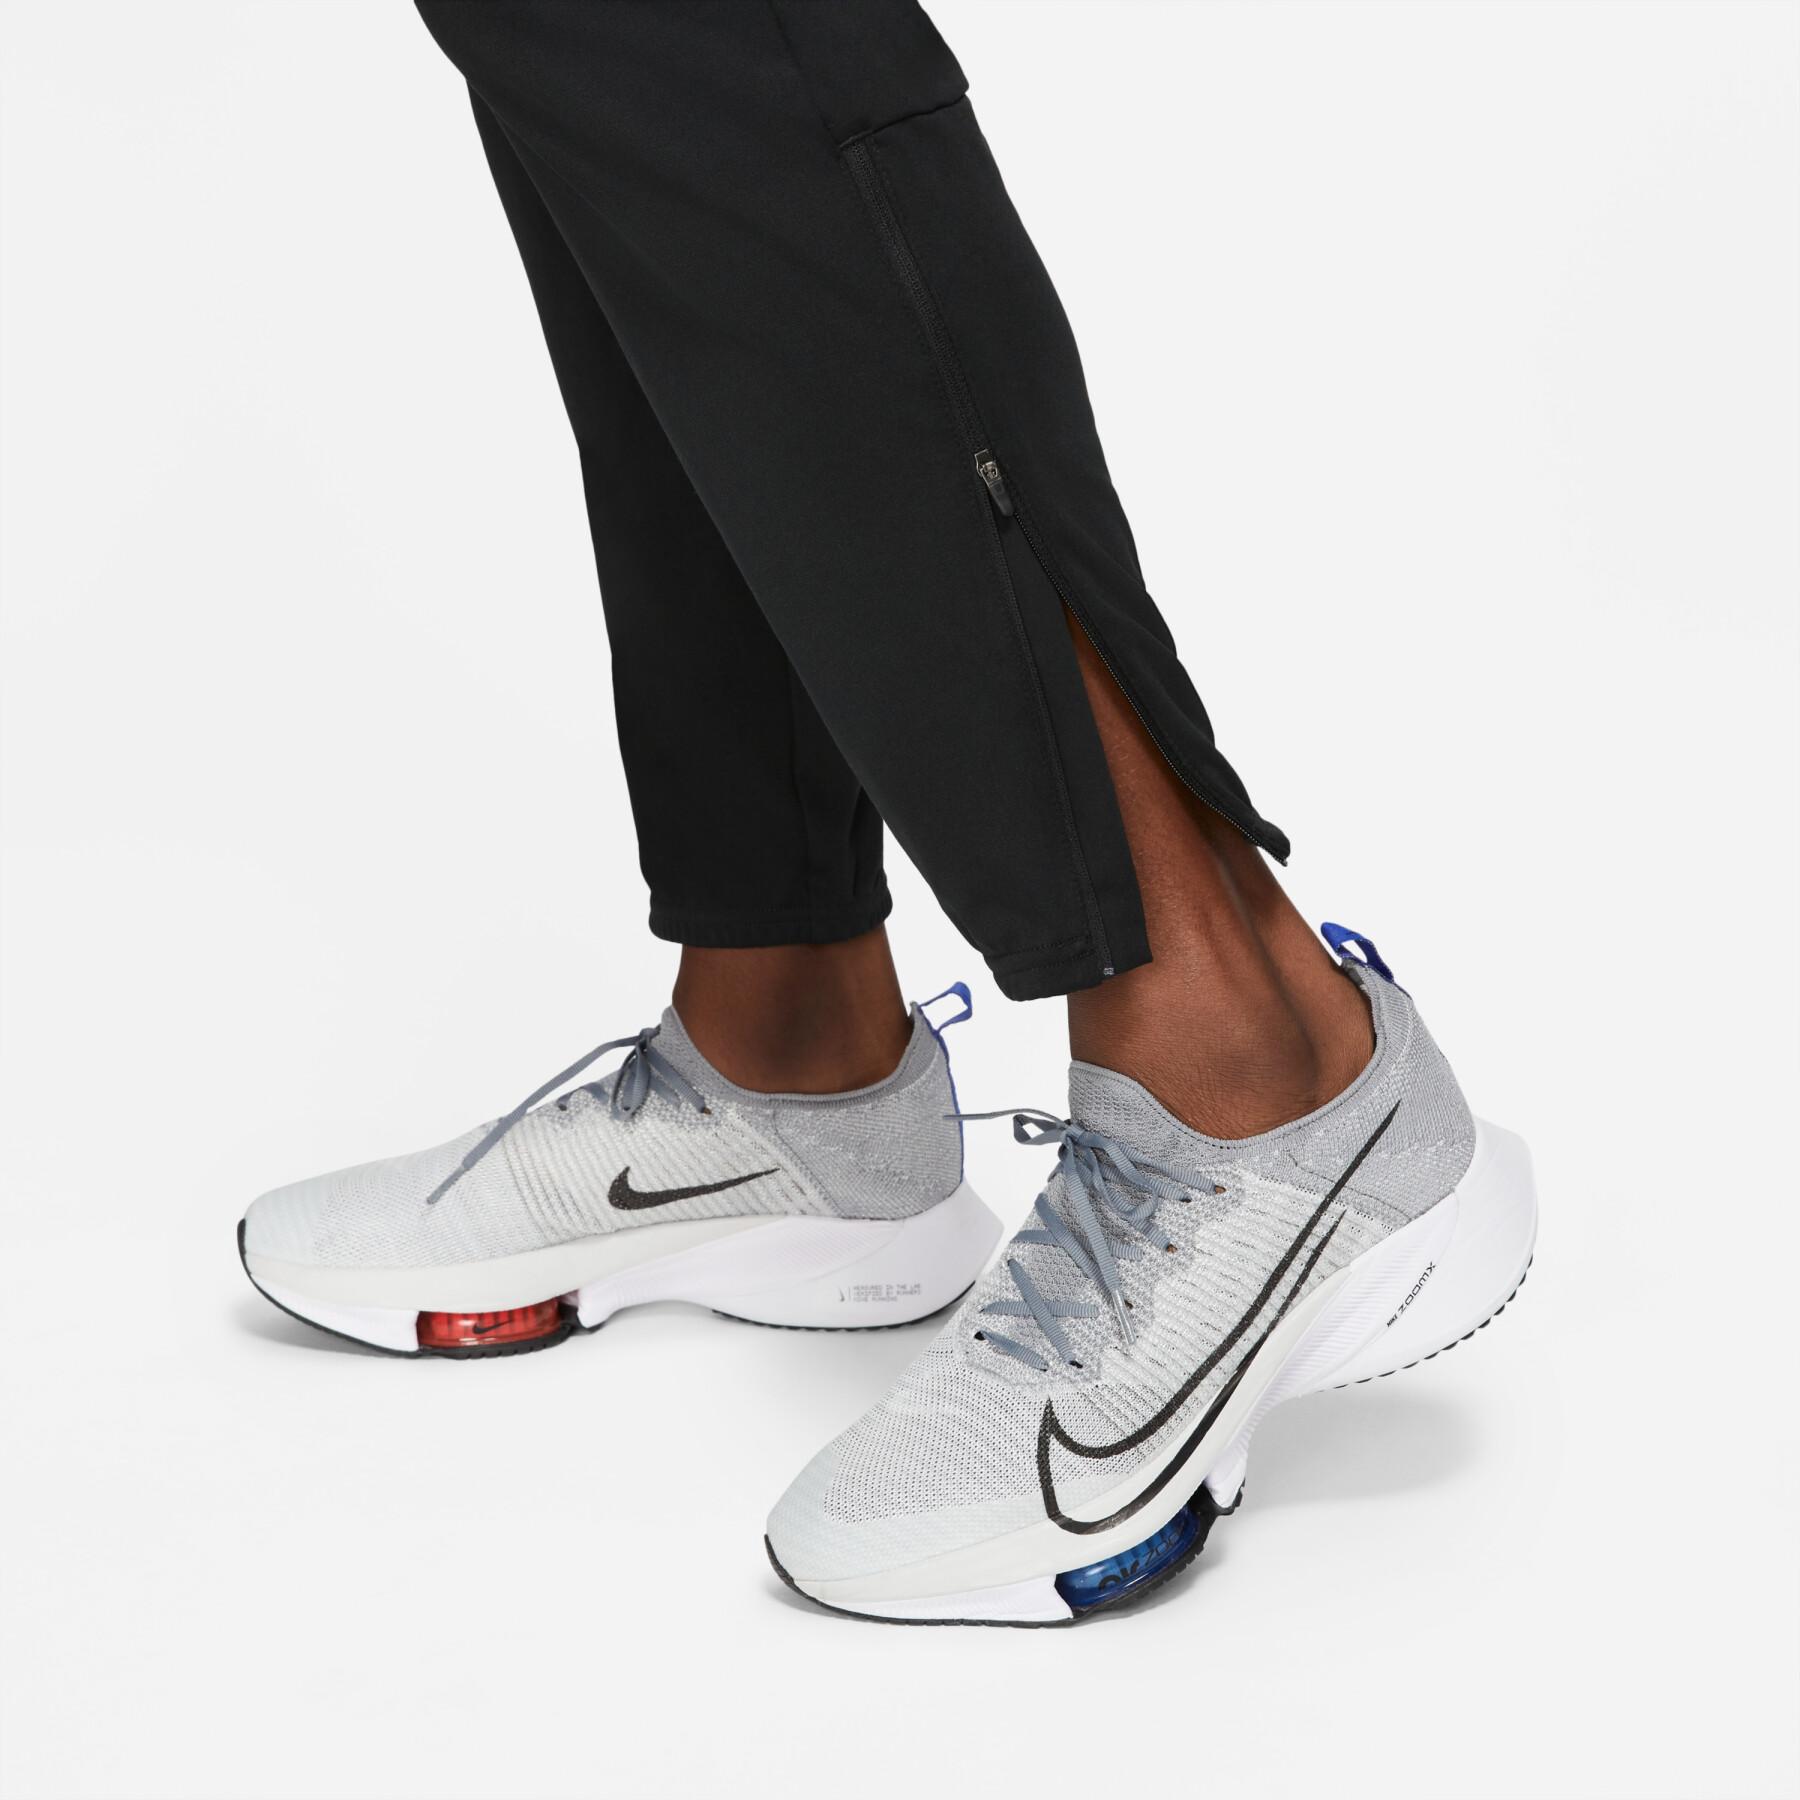 Pantalón de jogging Nike Dri-FIT Challenger